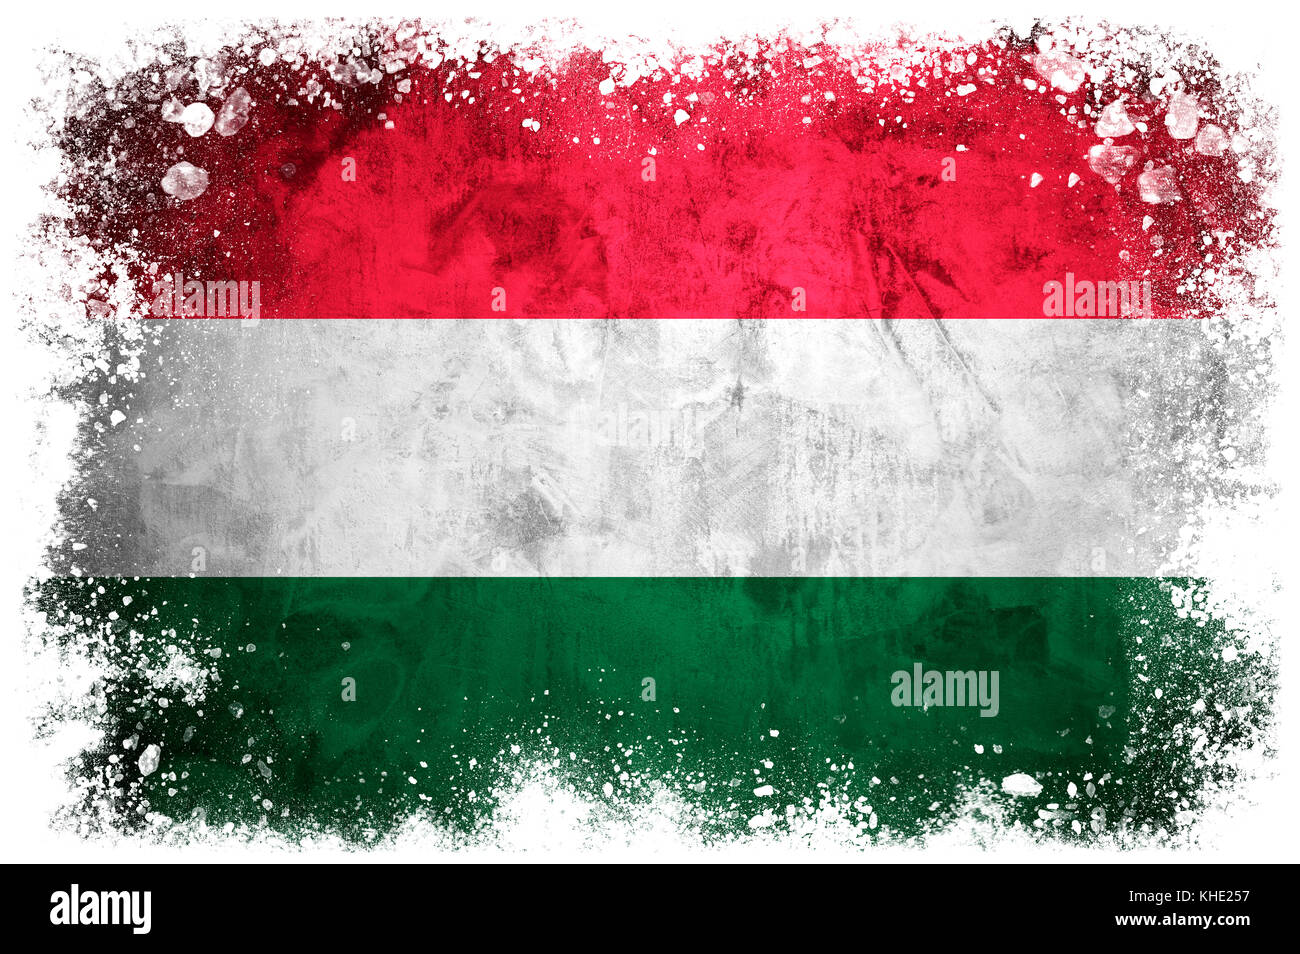 National flag of Hungary on grunge concrete background Stock Photo